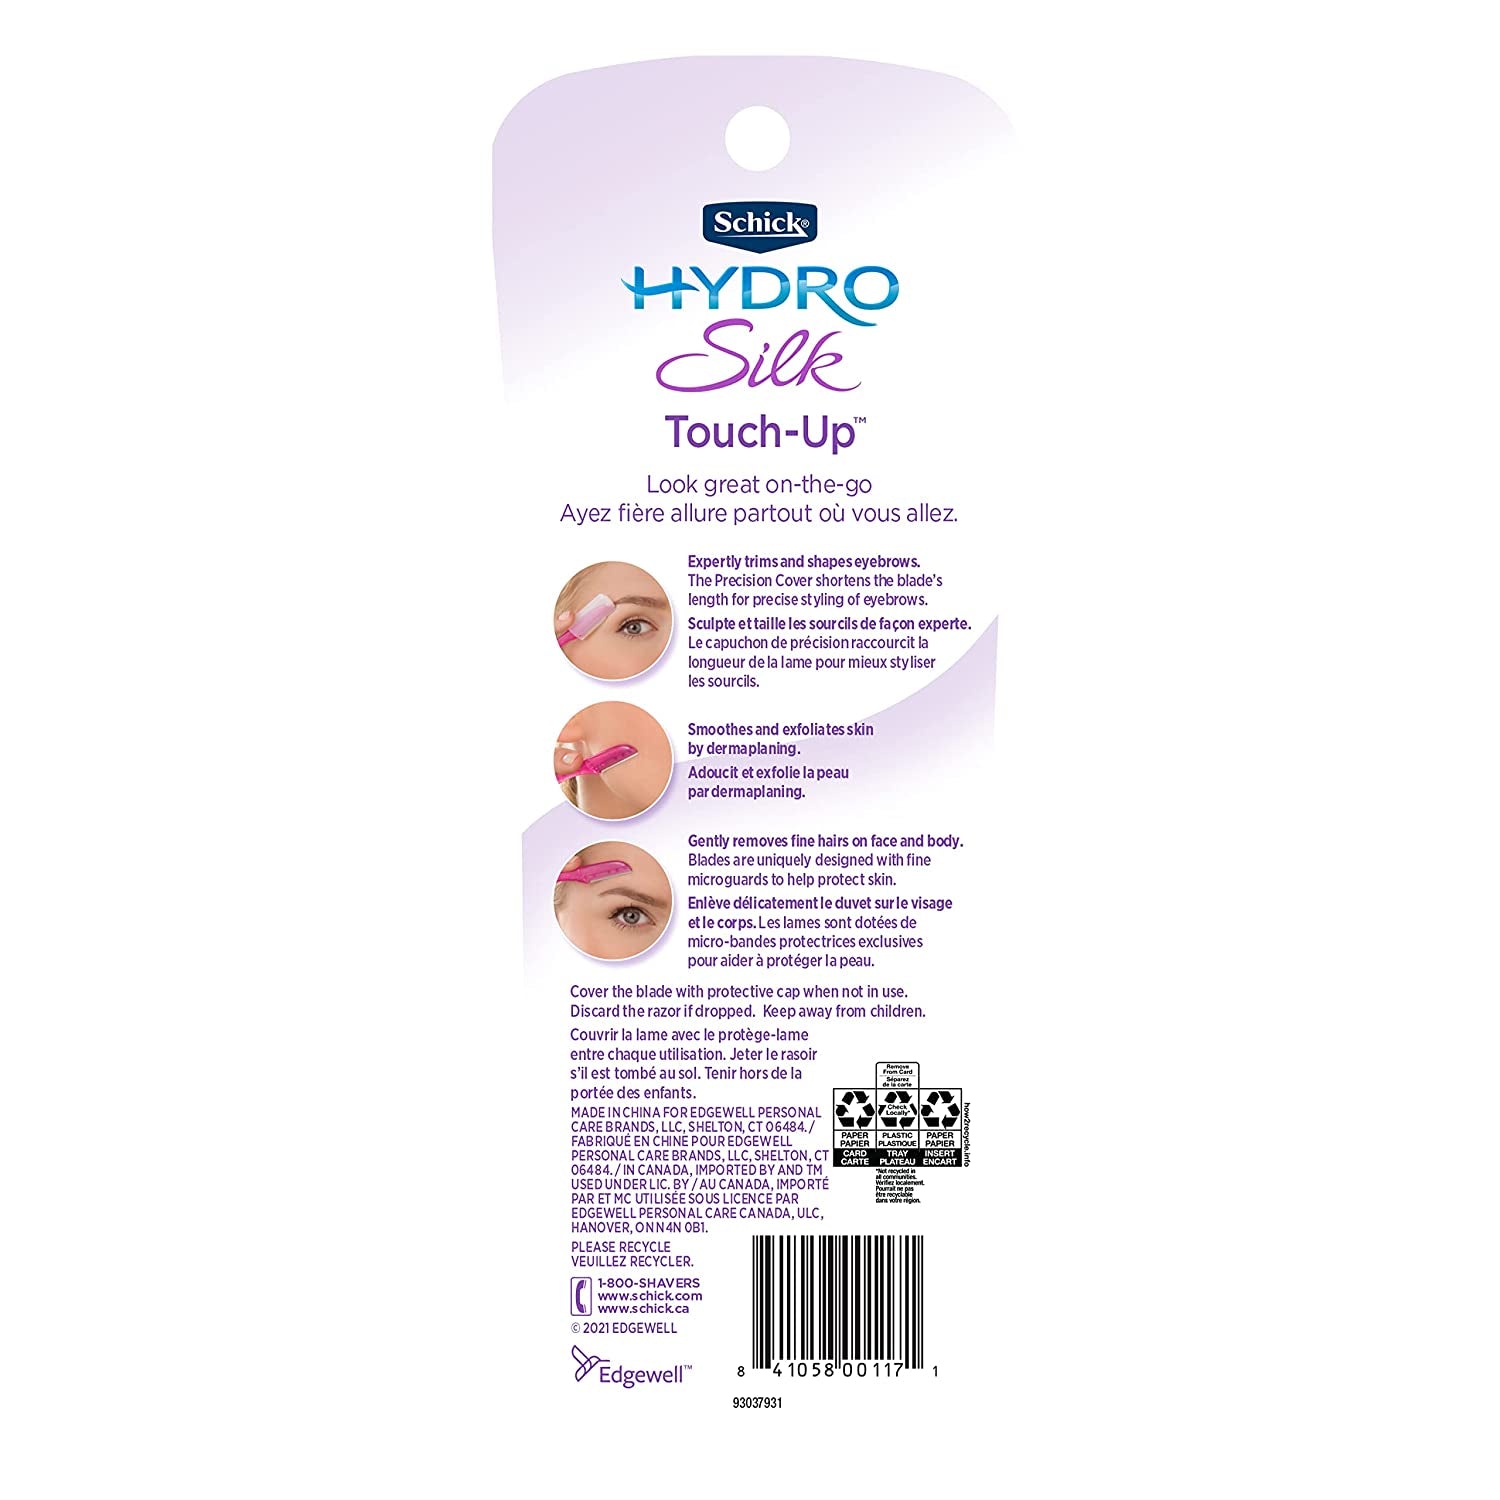 Hydro Silk Touch-Up - Face & Eyebrow Razor with Precision Cover Razor